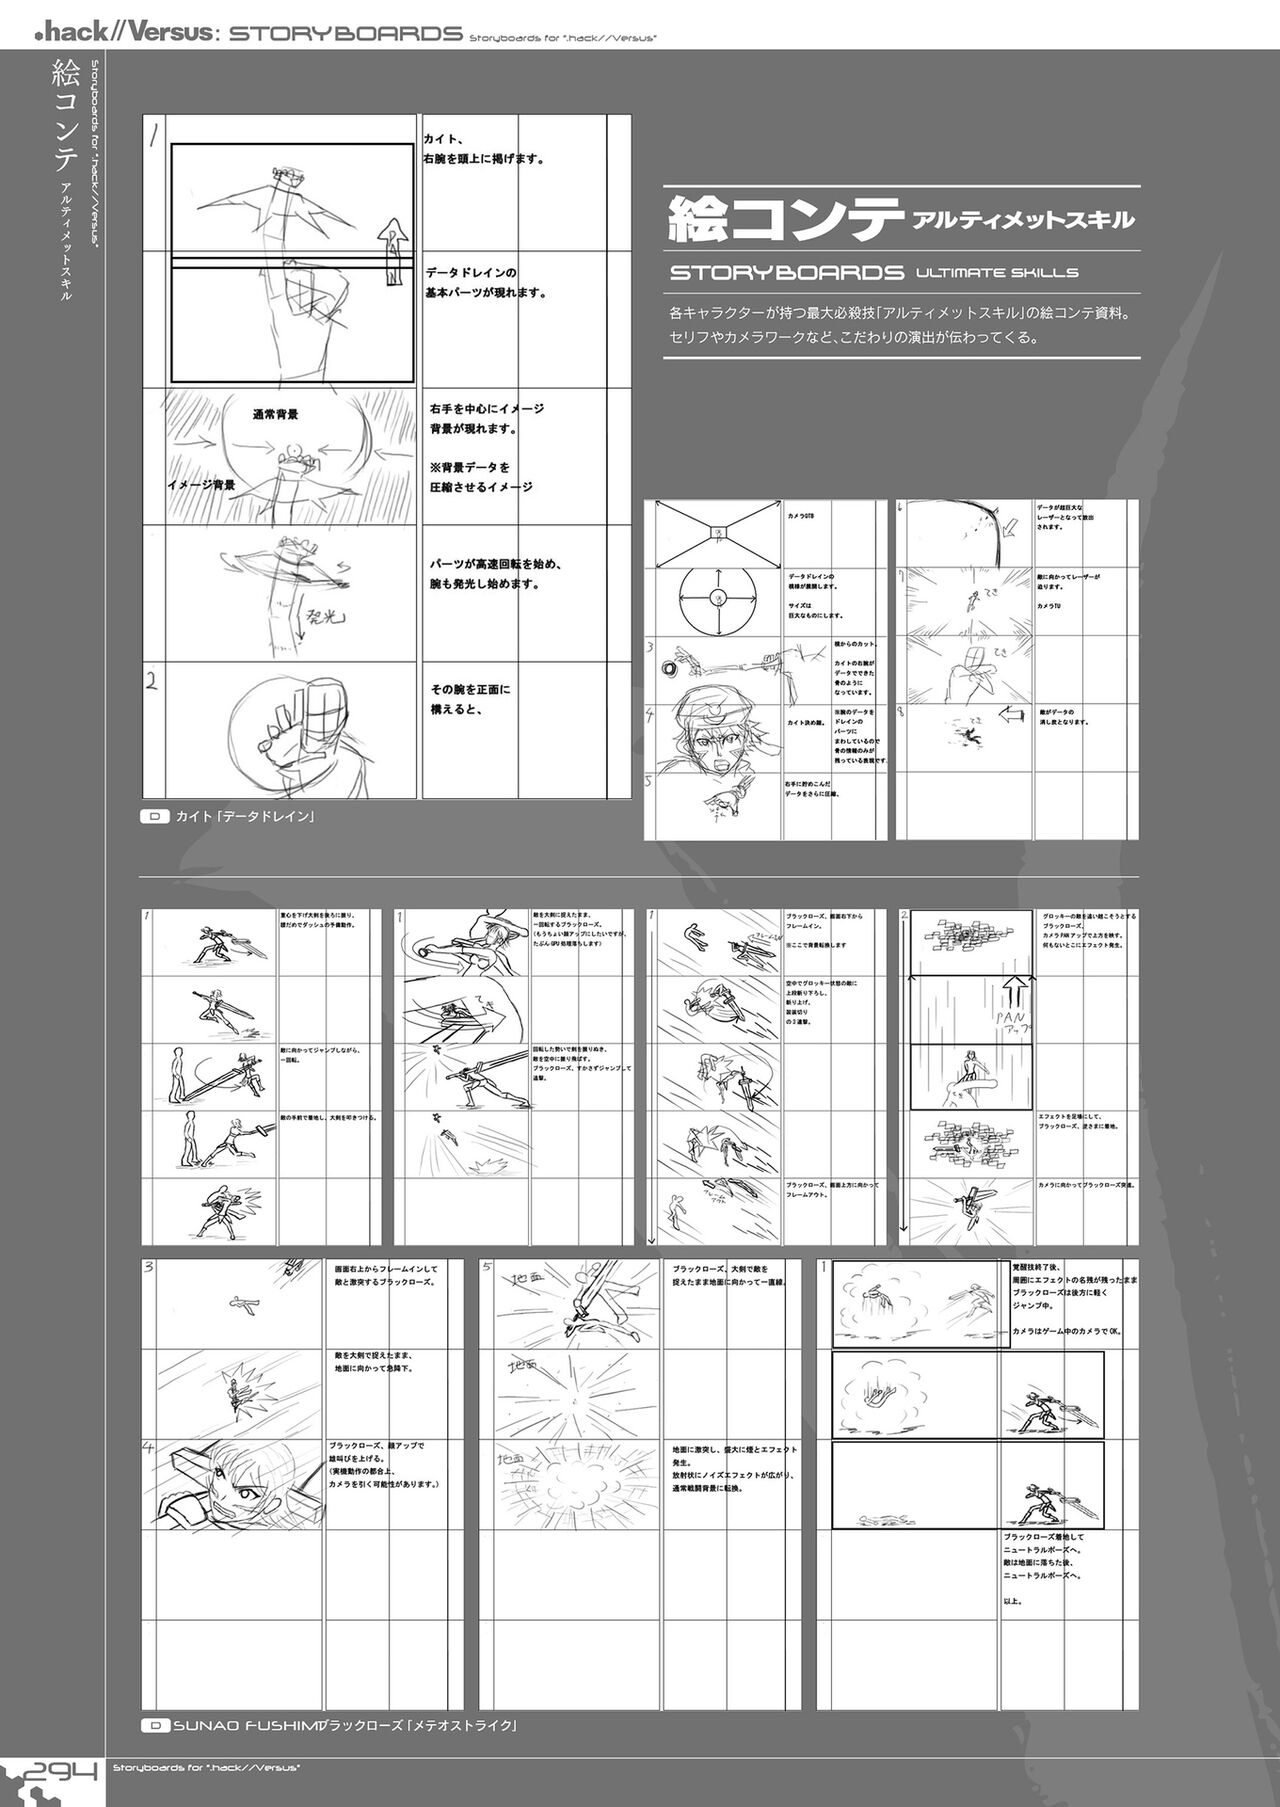 Dot Hack Sekai-no Muko ni  +Versus Complete Set  Documentation .hack //Archives _ 05 296